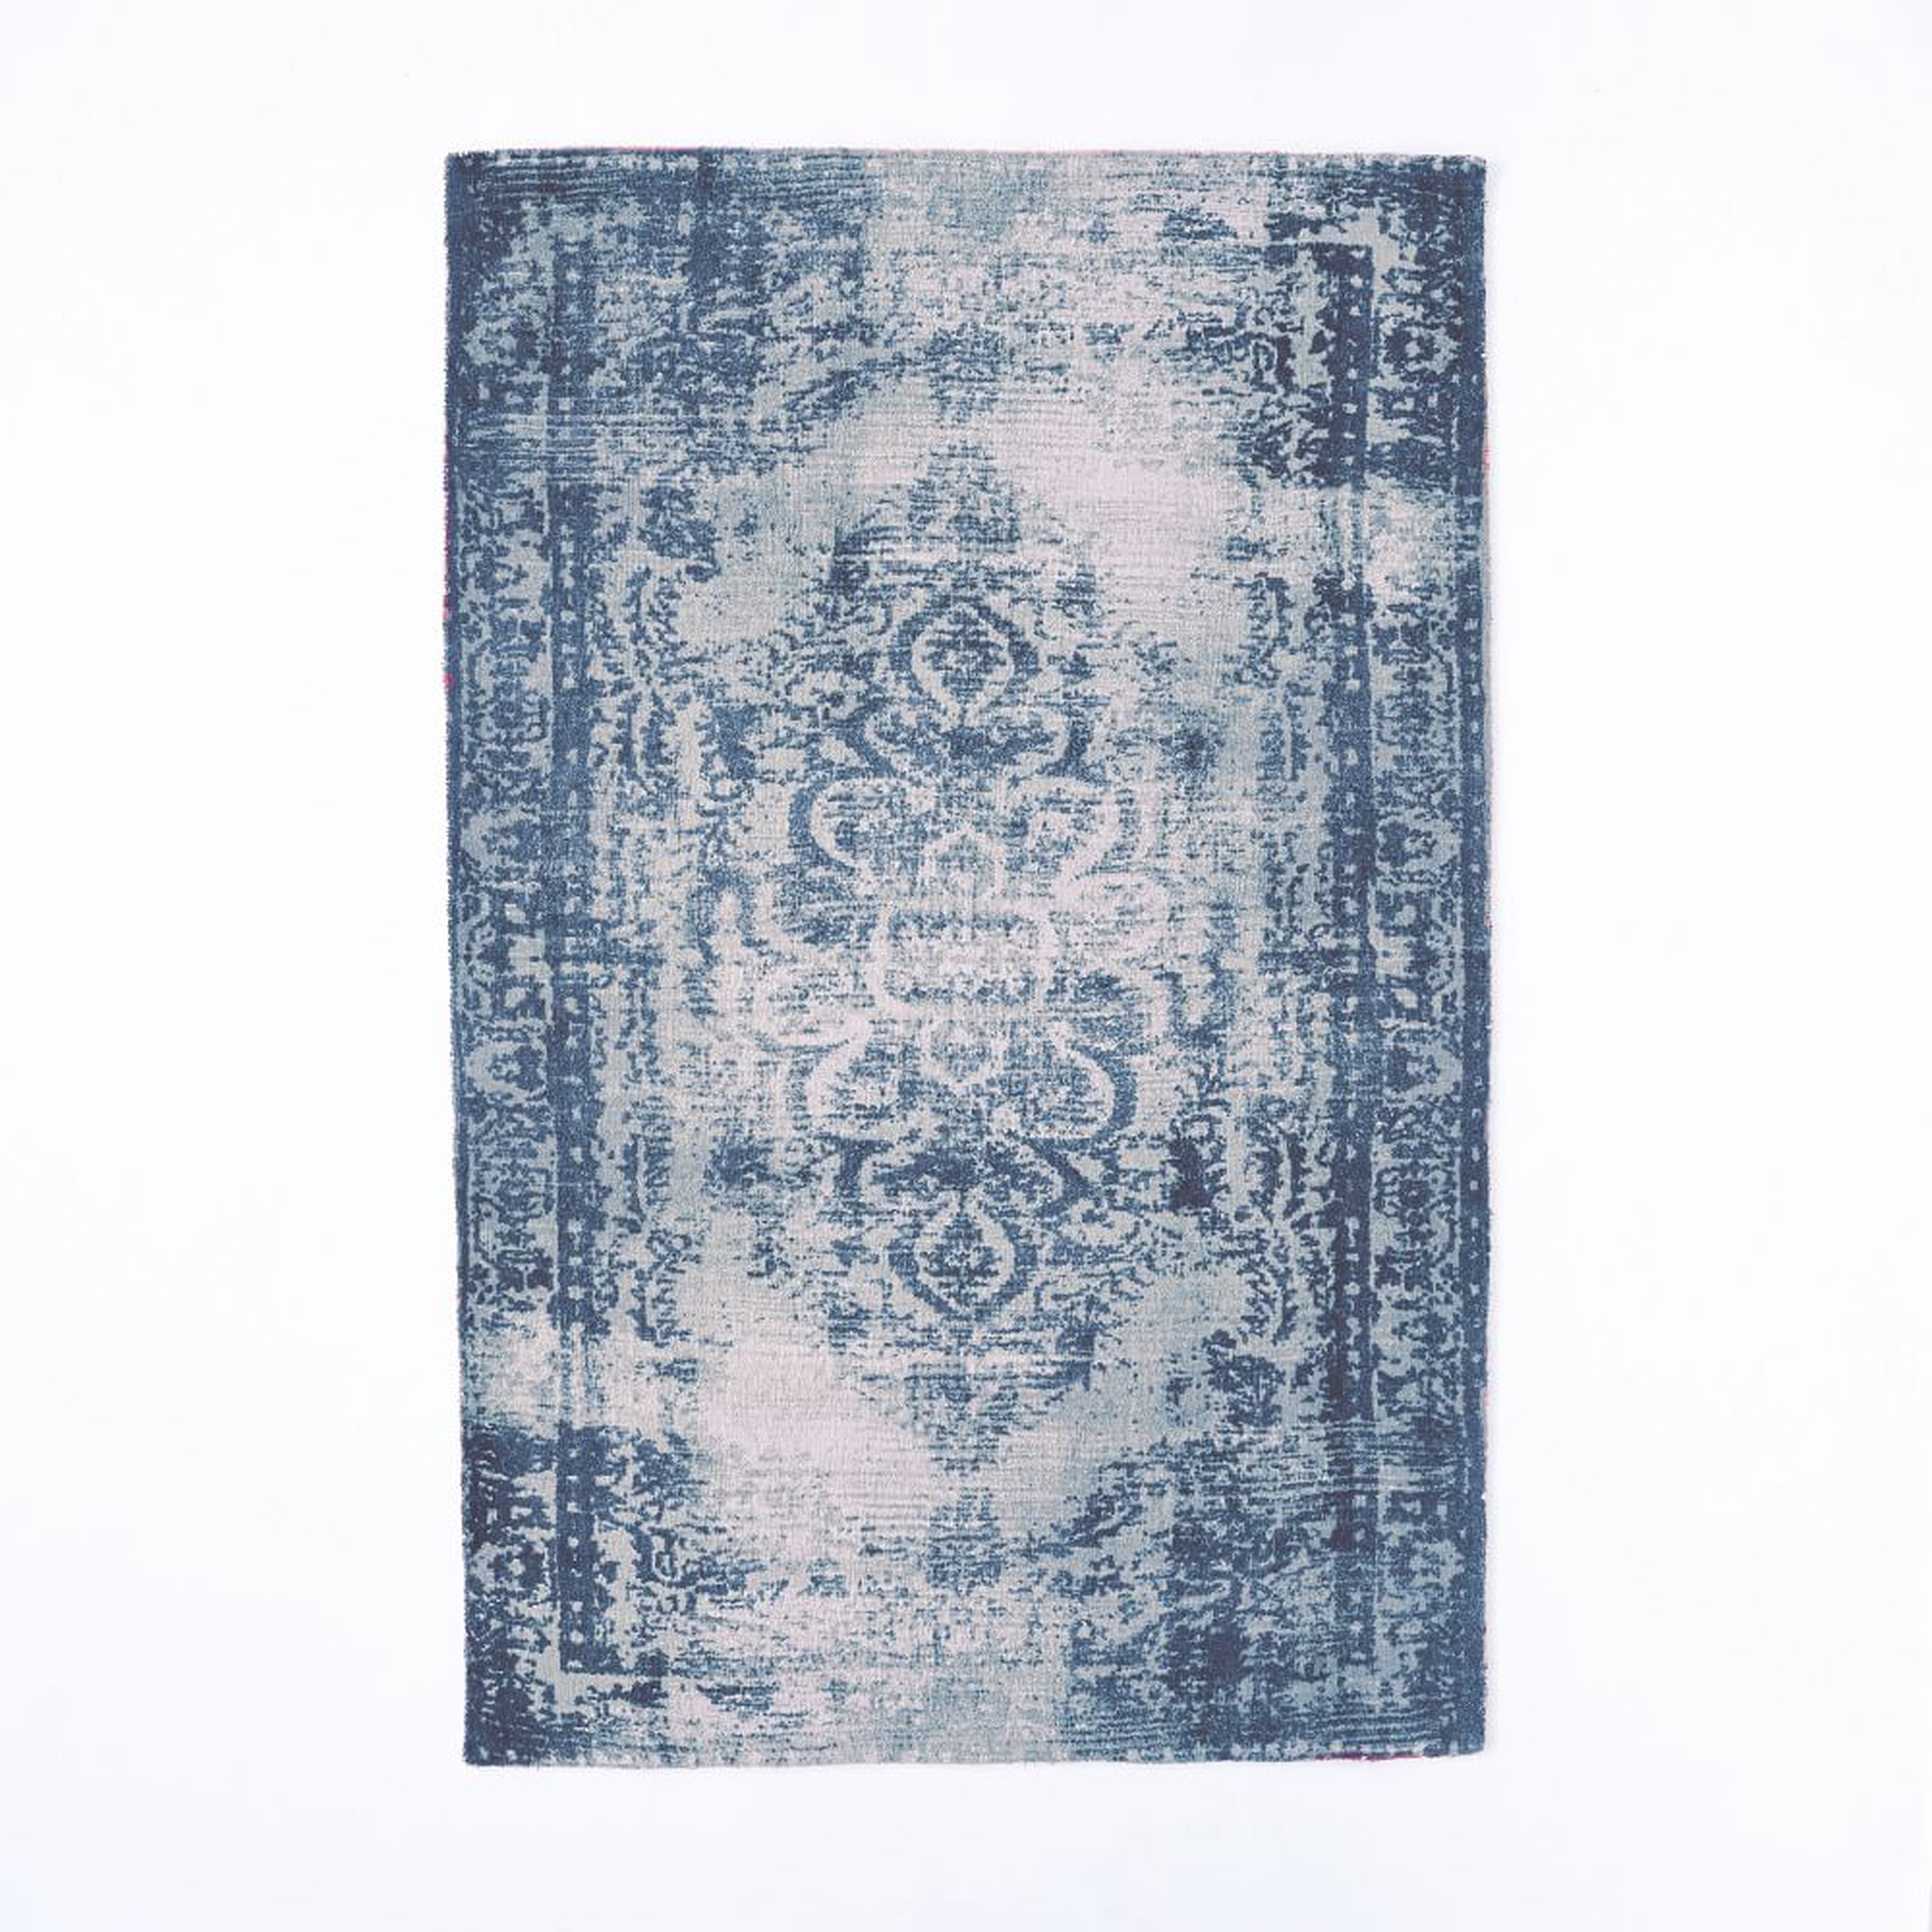 Arabesque Wool Printed Rug, 5x8, Midnight - West Elm